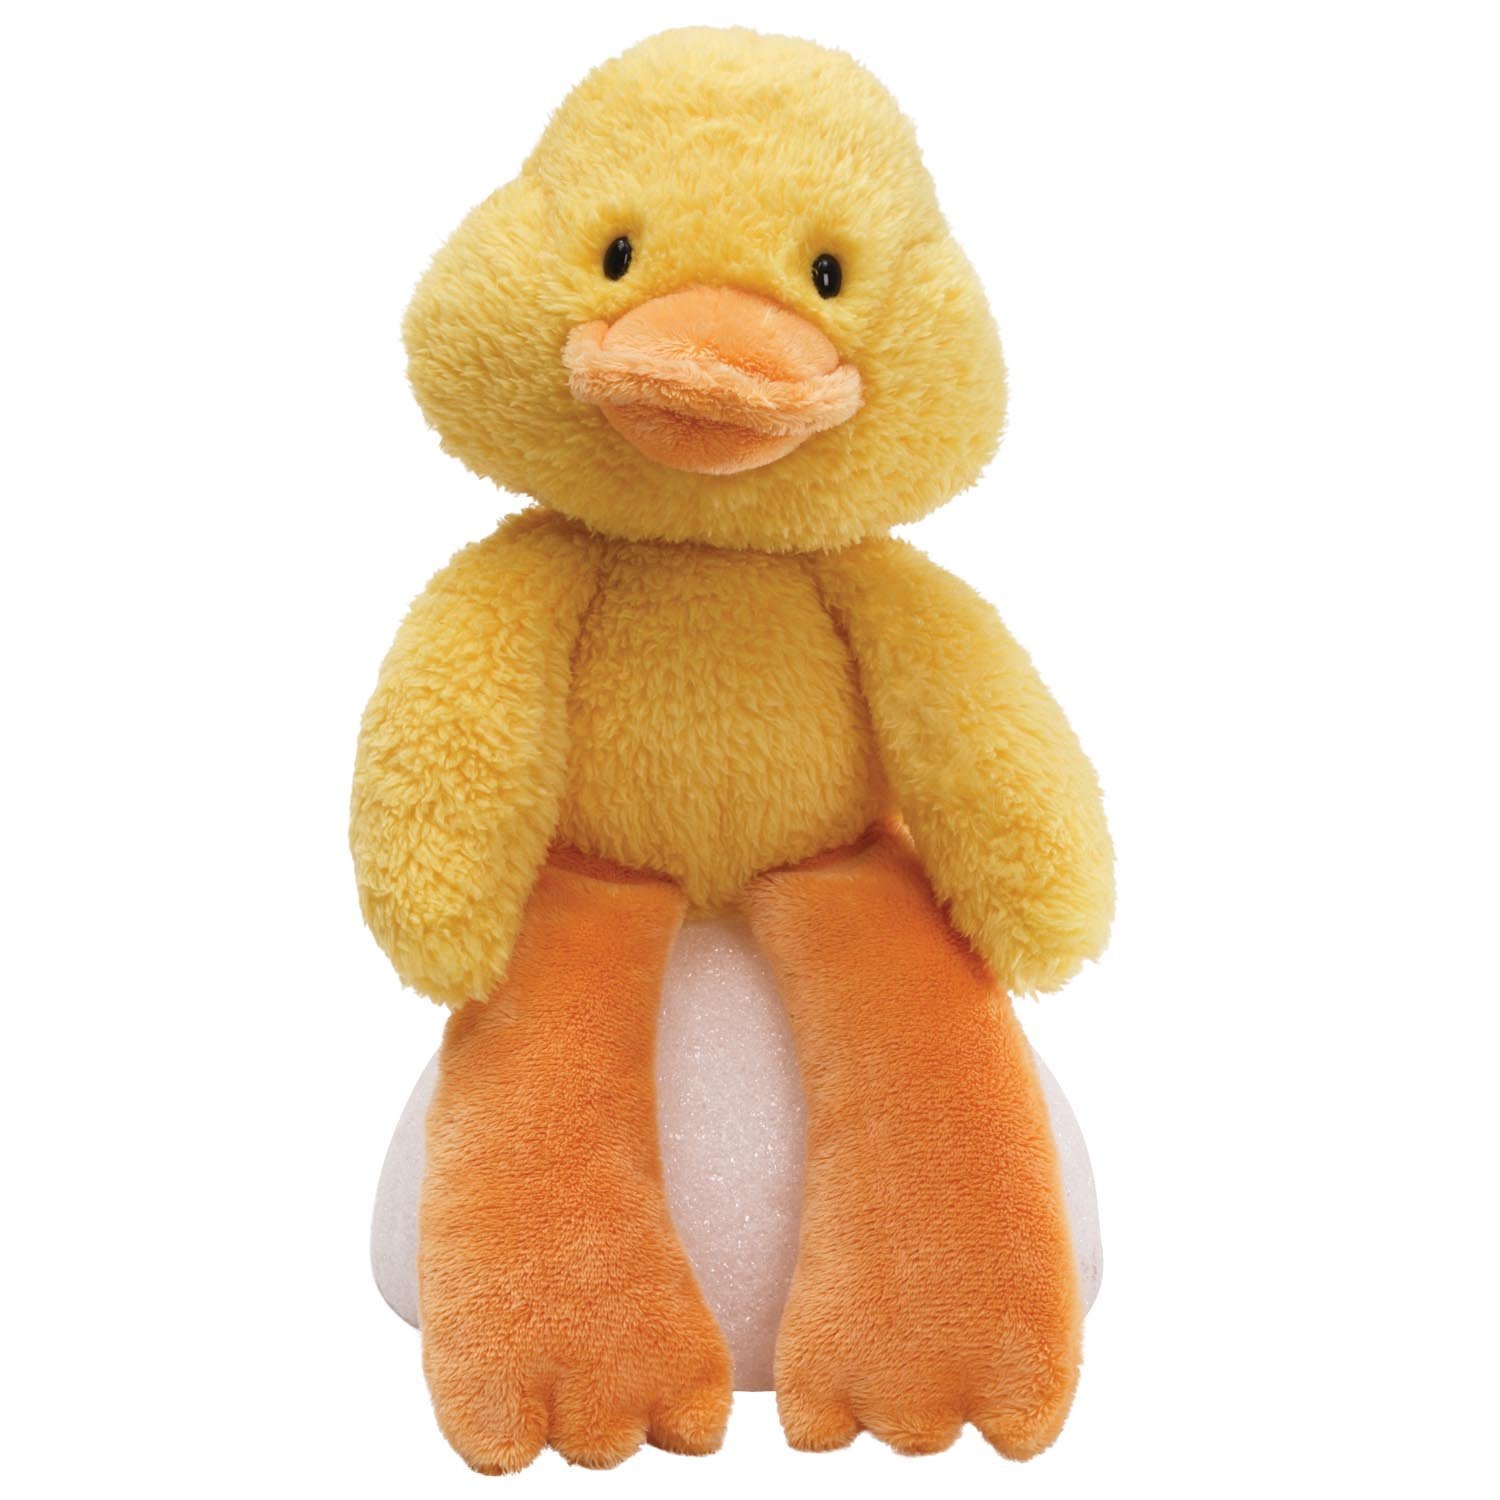 Amazon.com: Gund Fuzzy Duck Stuffed Animal: Toys & Games